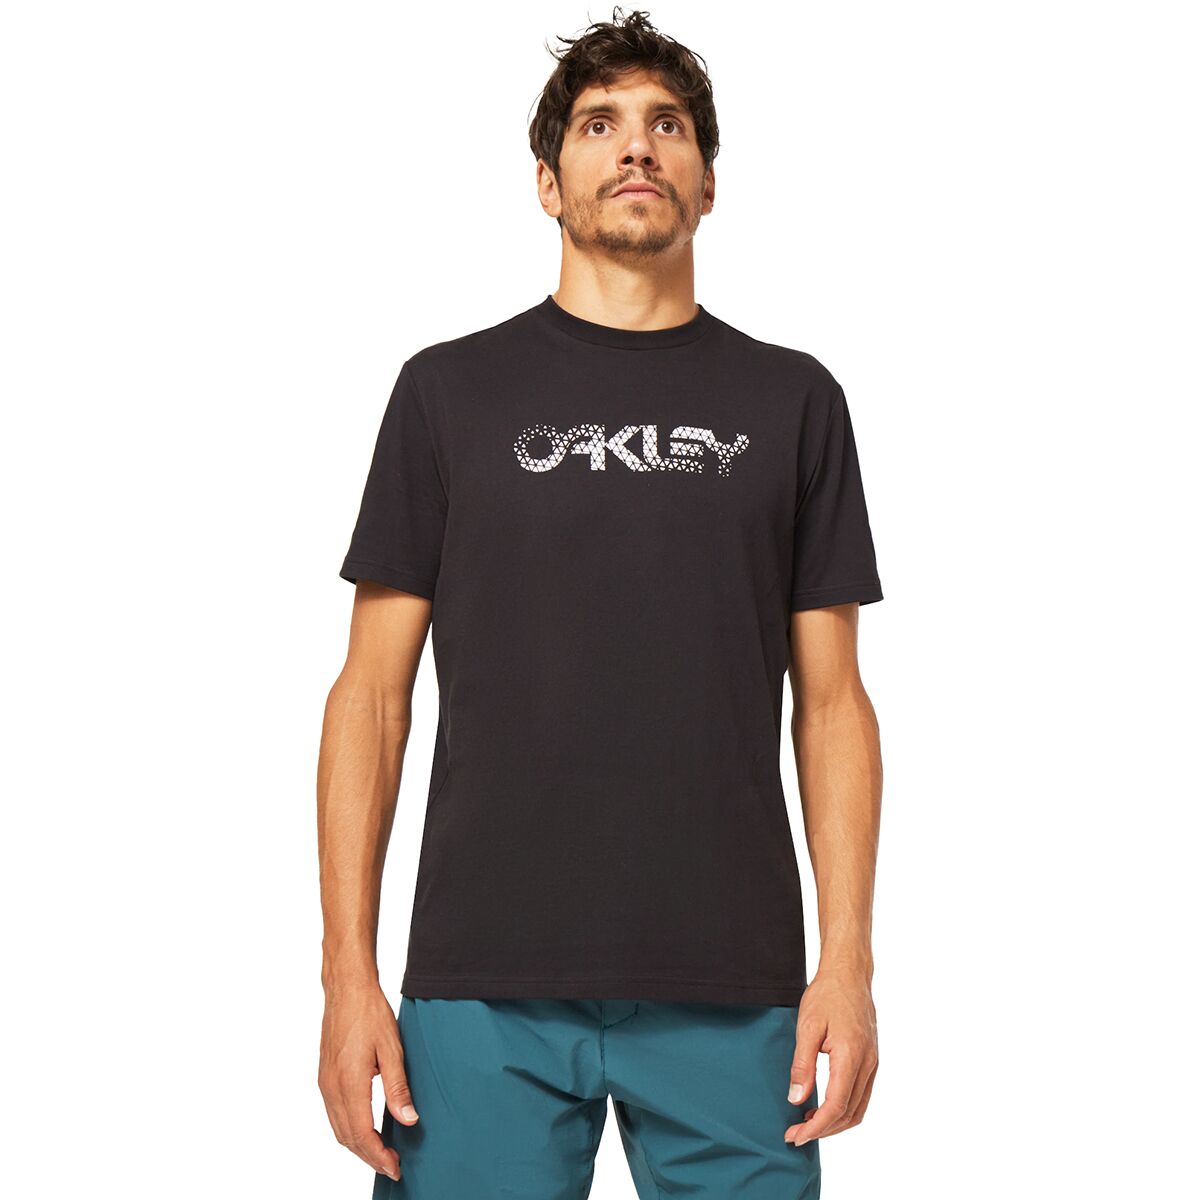 Oakley MTB B1B T-Shirt Jersey - Men's